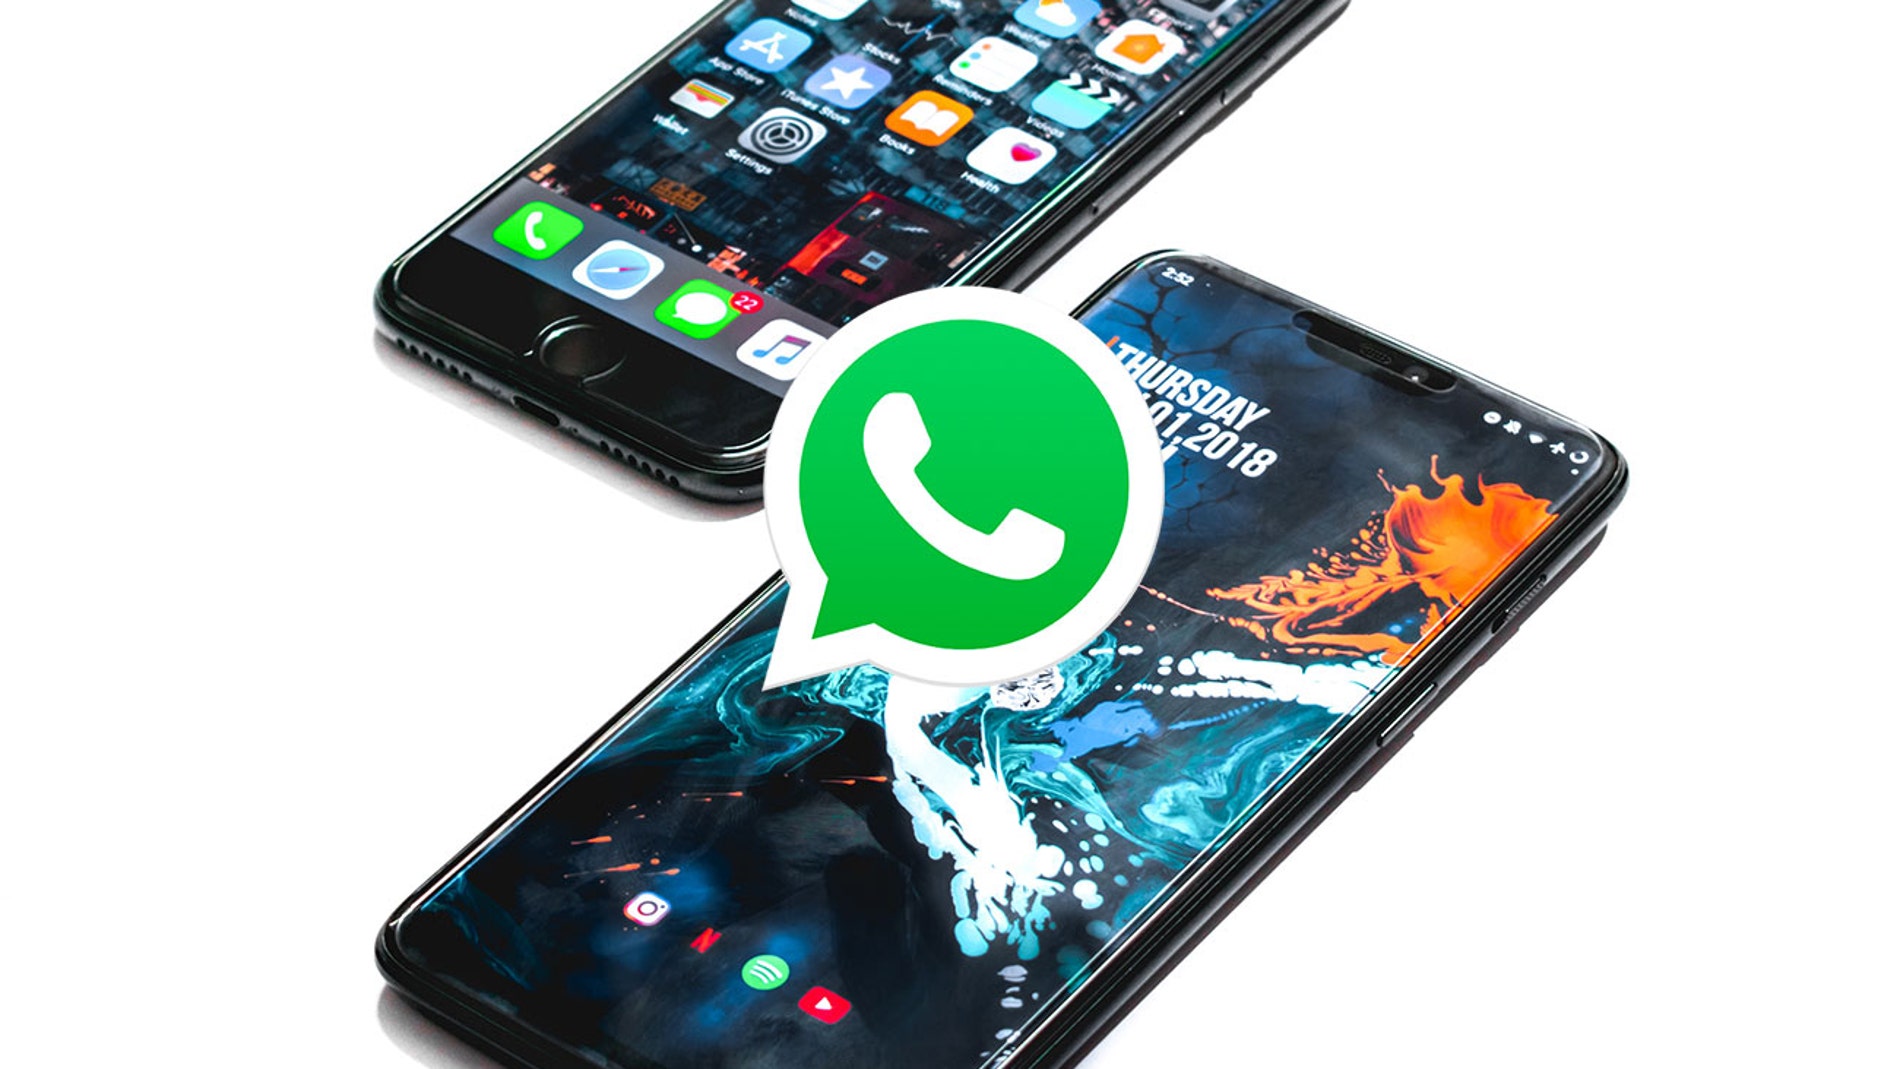 WhatsApp iOS Android